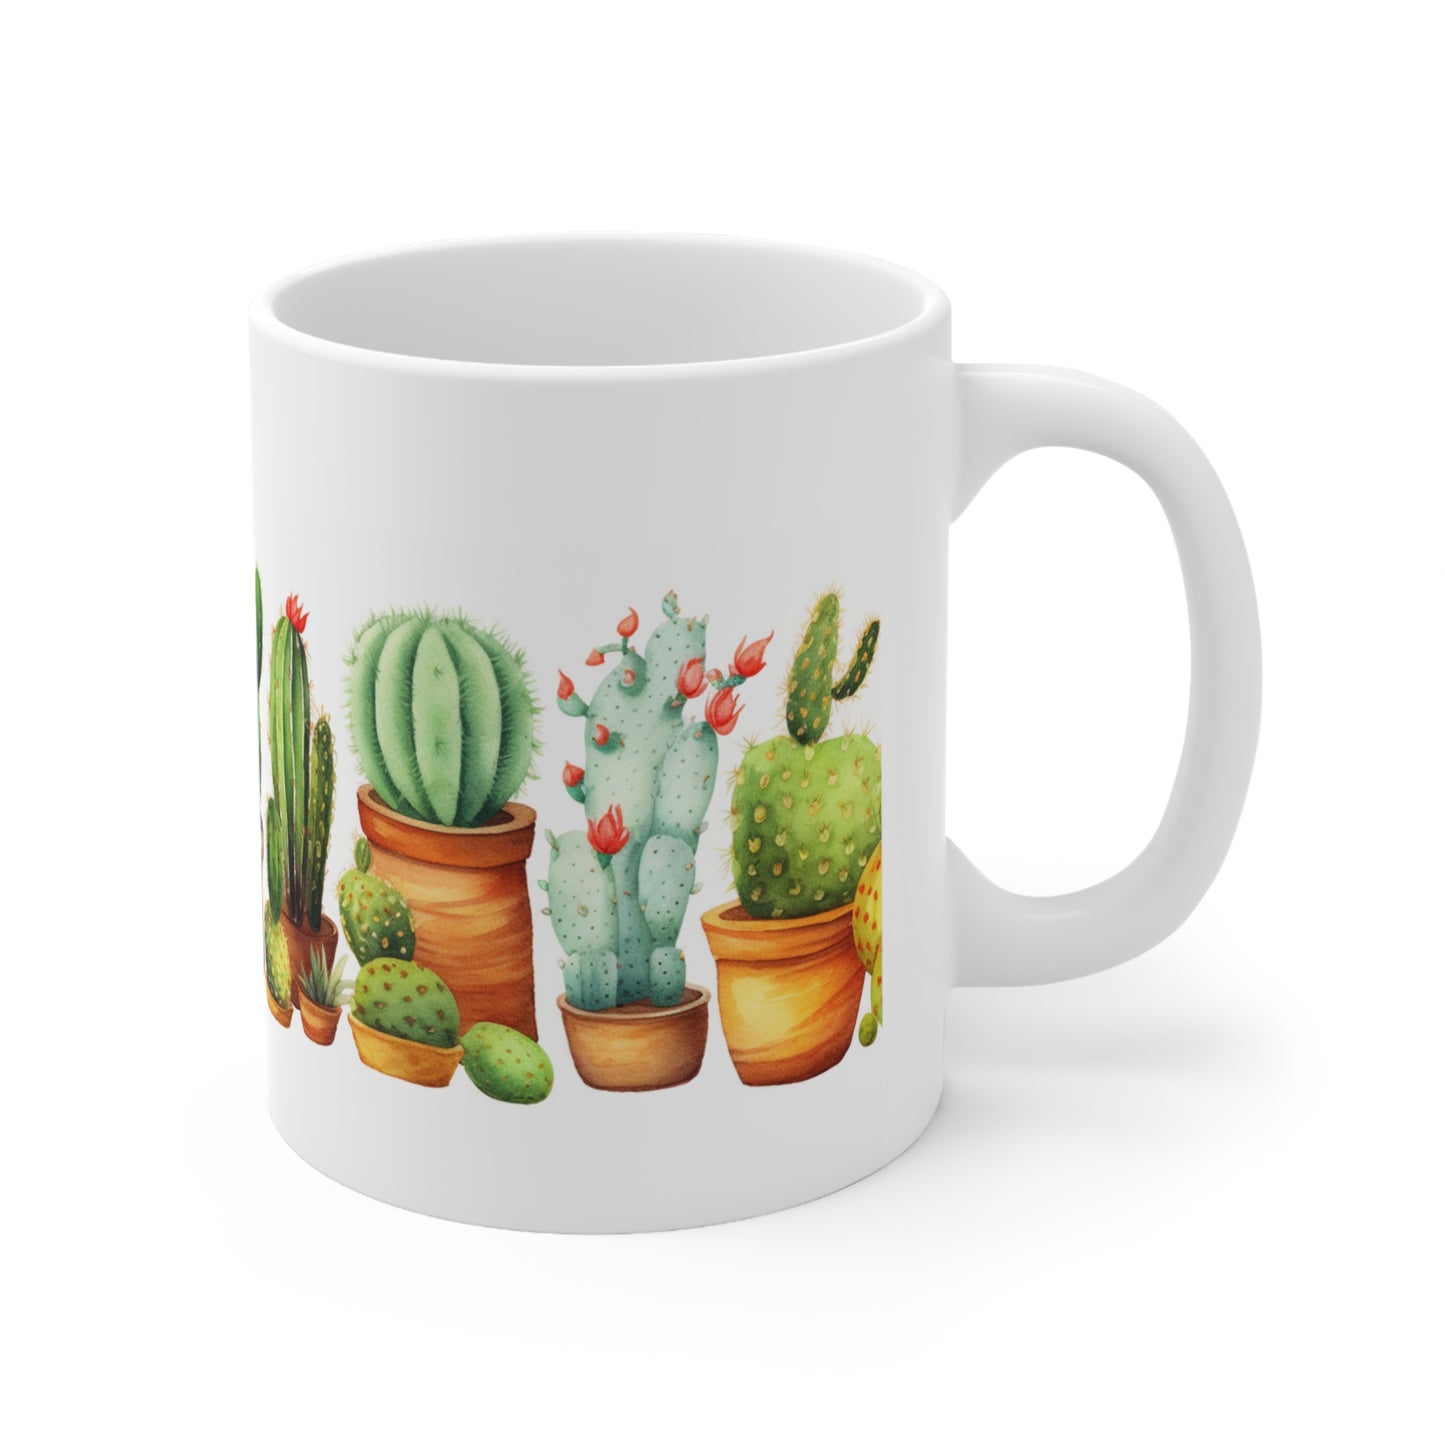 "It's Coffee Time Succa!" Ceramic Mug